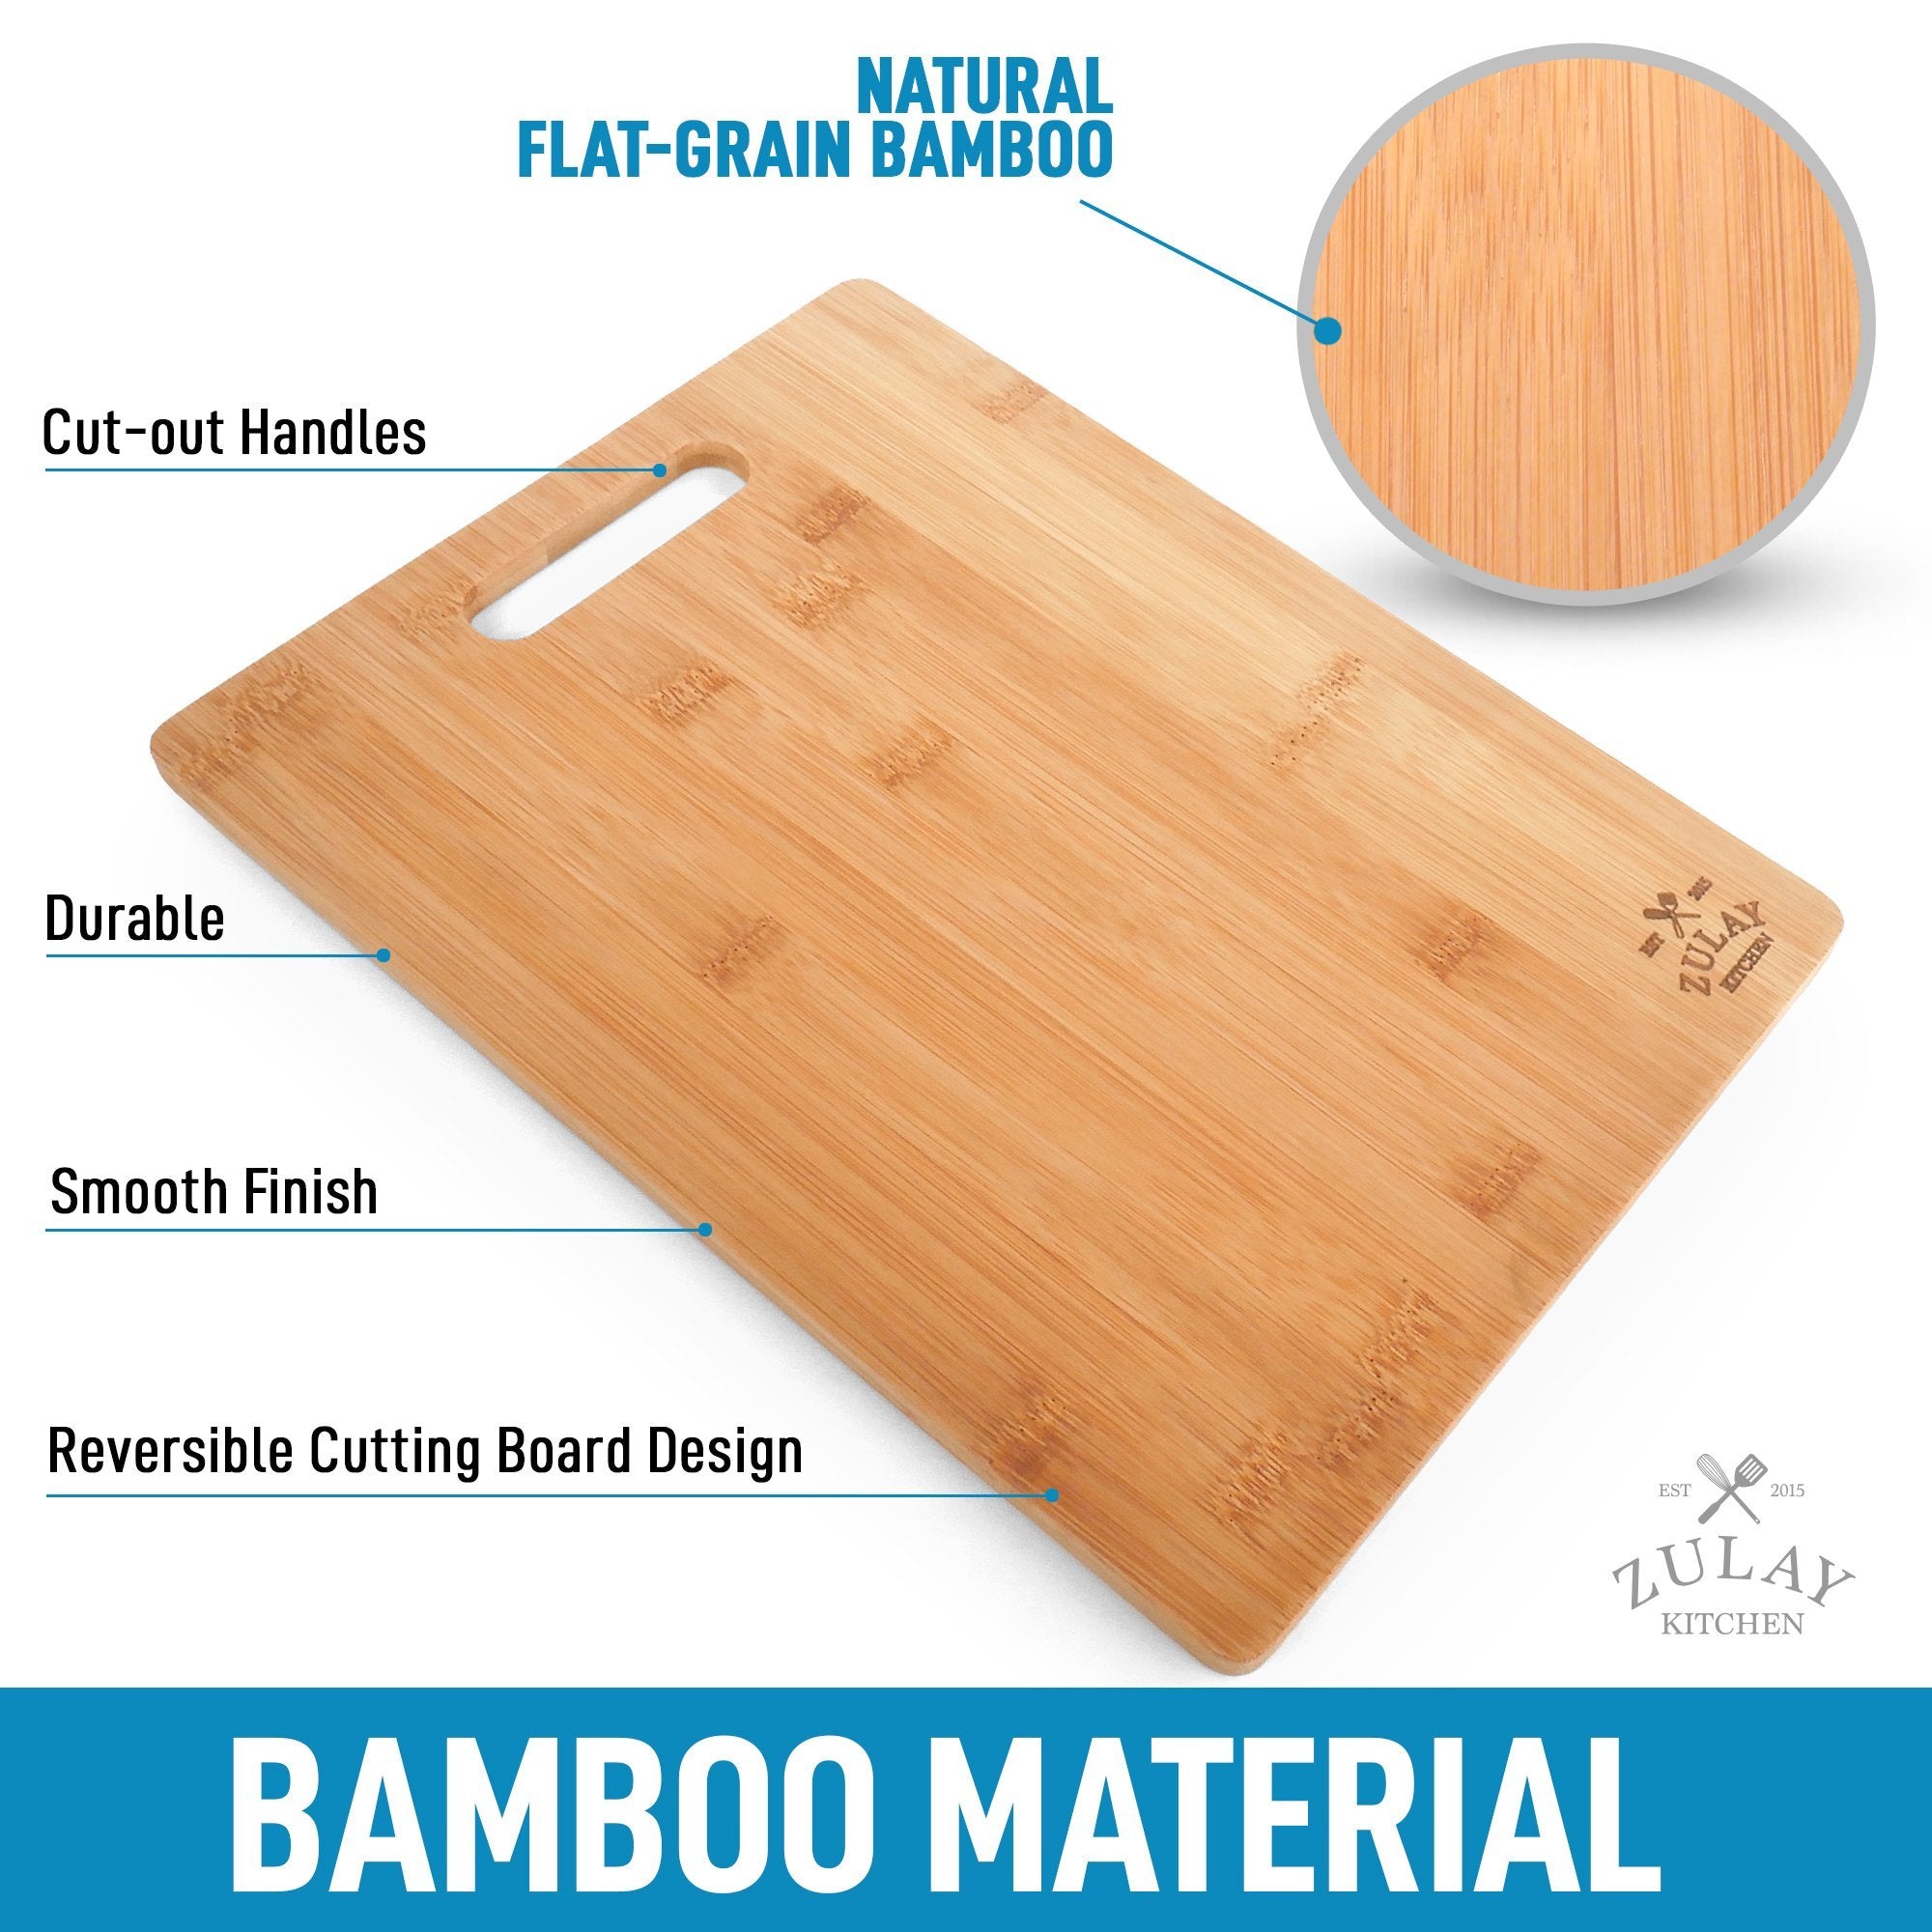 Kitchen Cutting Board Set Bamboo 3 Piece – Radiate Your Love